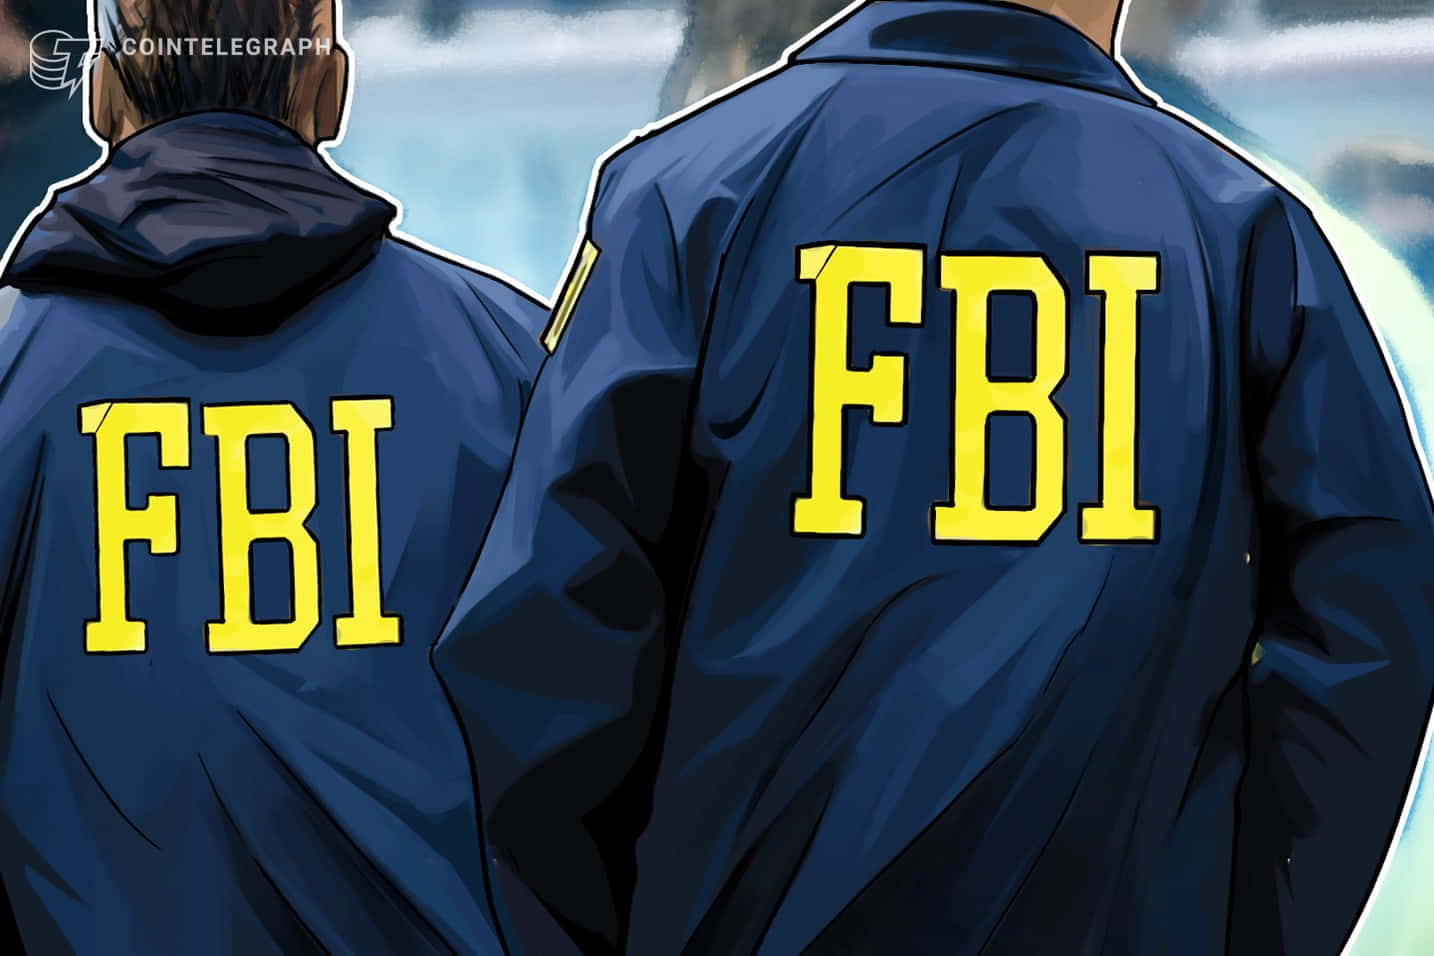 to mænd i jakker med ordene fbi på dem. Wallpaper